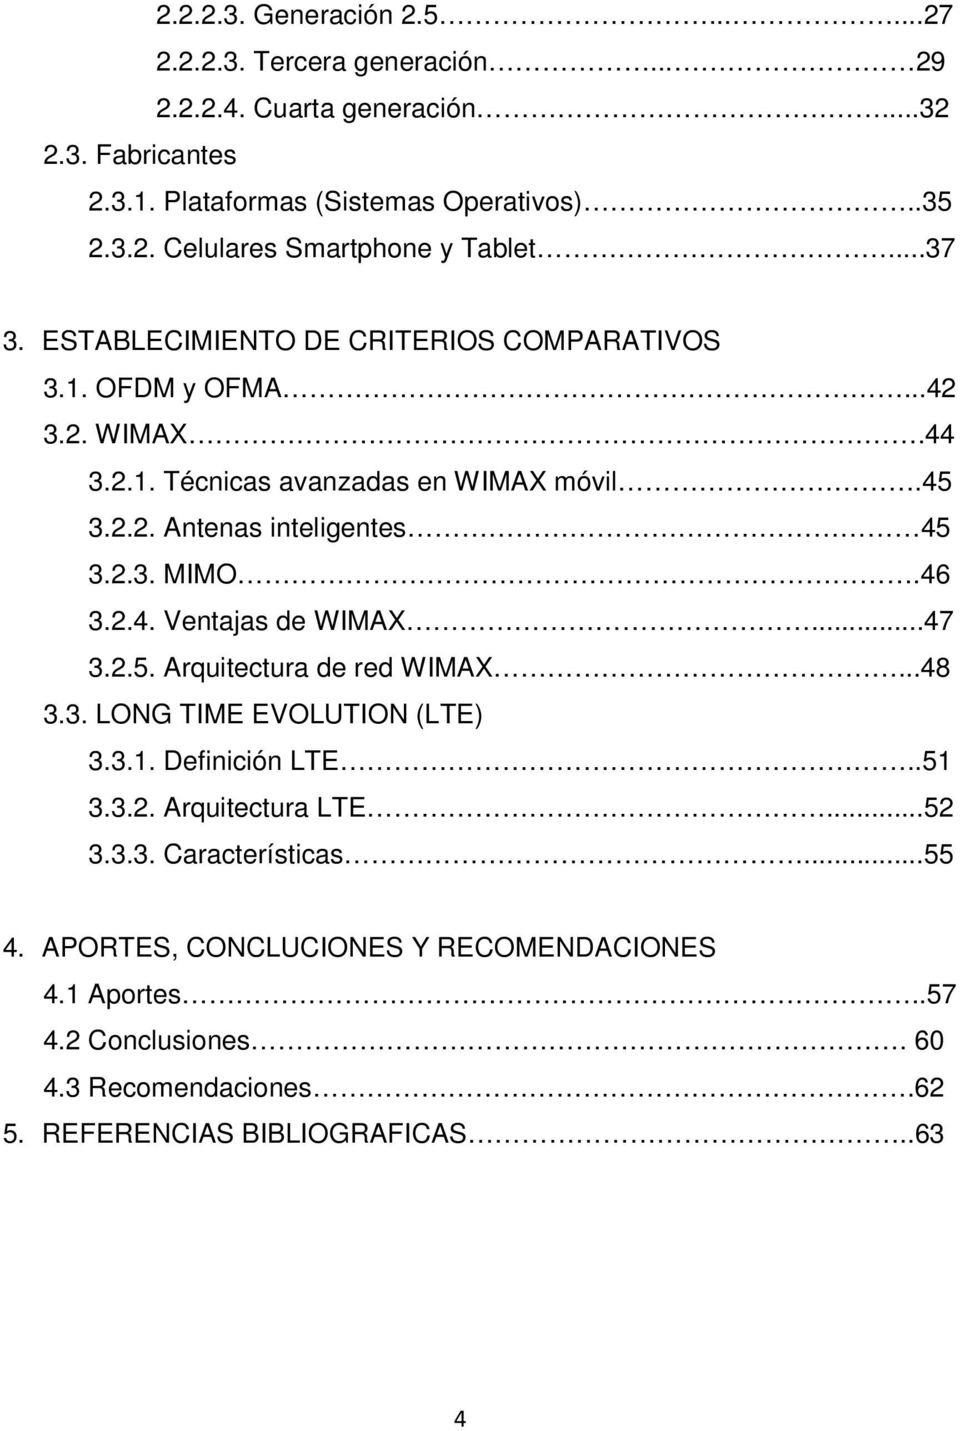 46 3.2.4. Ventajas de WIMAX...47 3.2.5. Arquitectura de red WIMAX...48 3.3. LONG TIME EVOLUTION (LTE) 3.3.1. Definición LTE..51 3.3.2. Arquitectura LTE...52 3.3.3. Características.